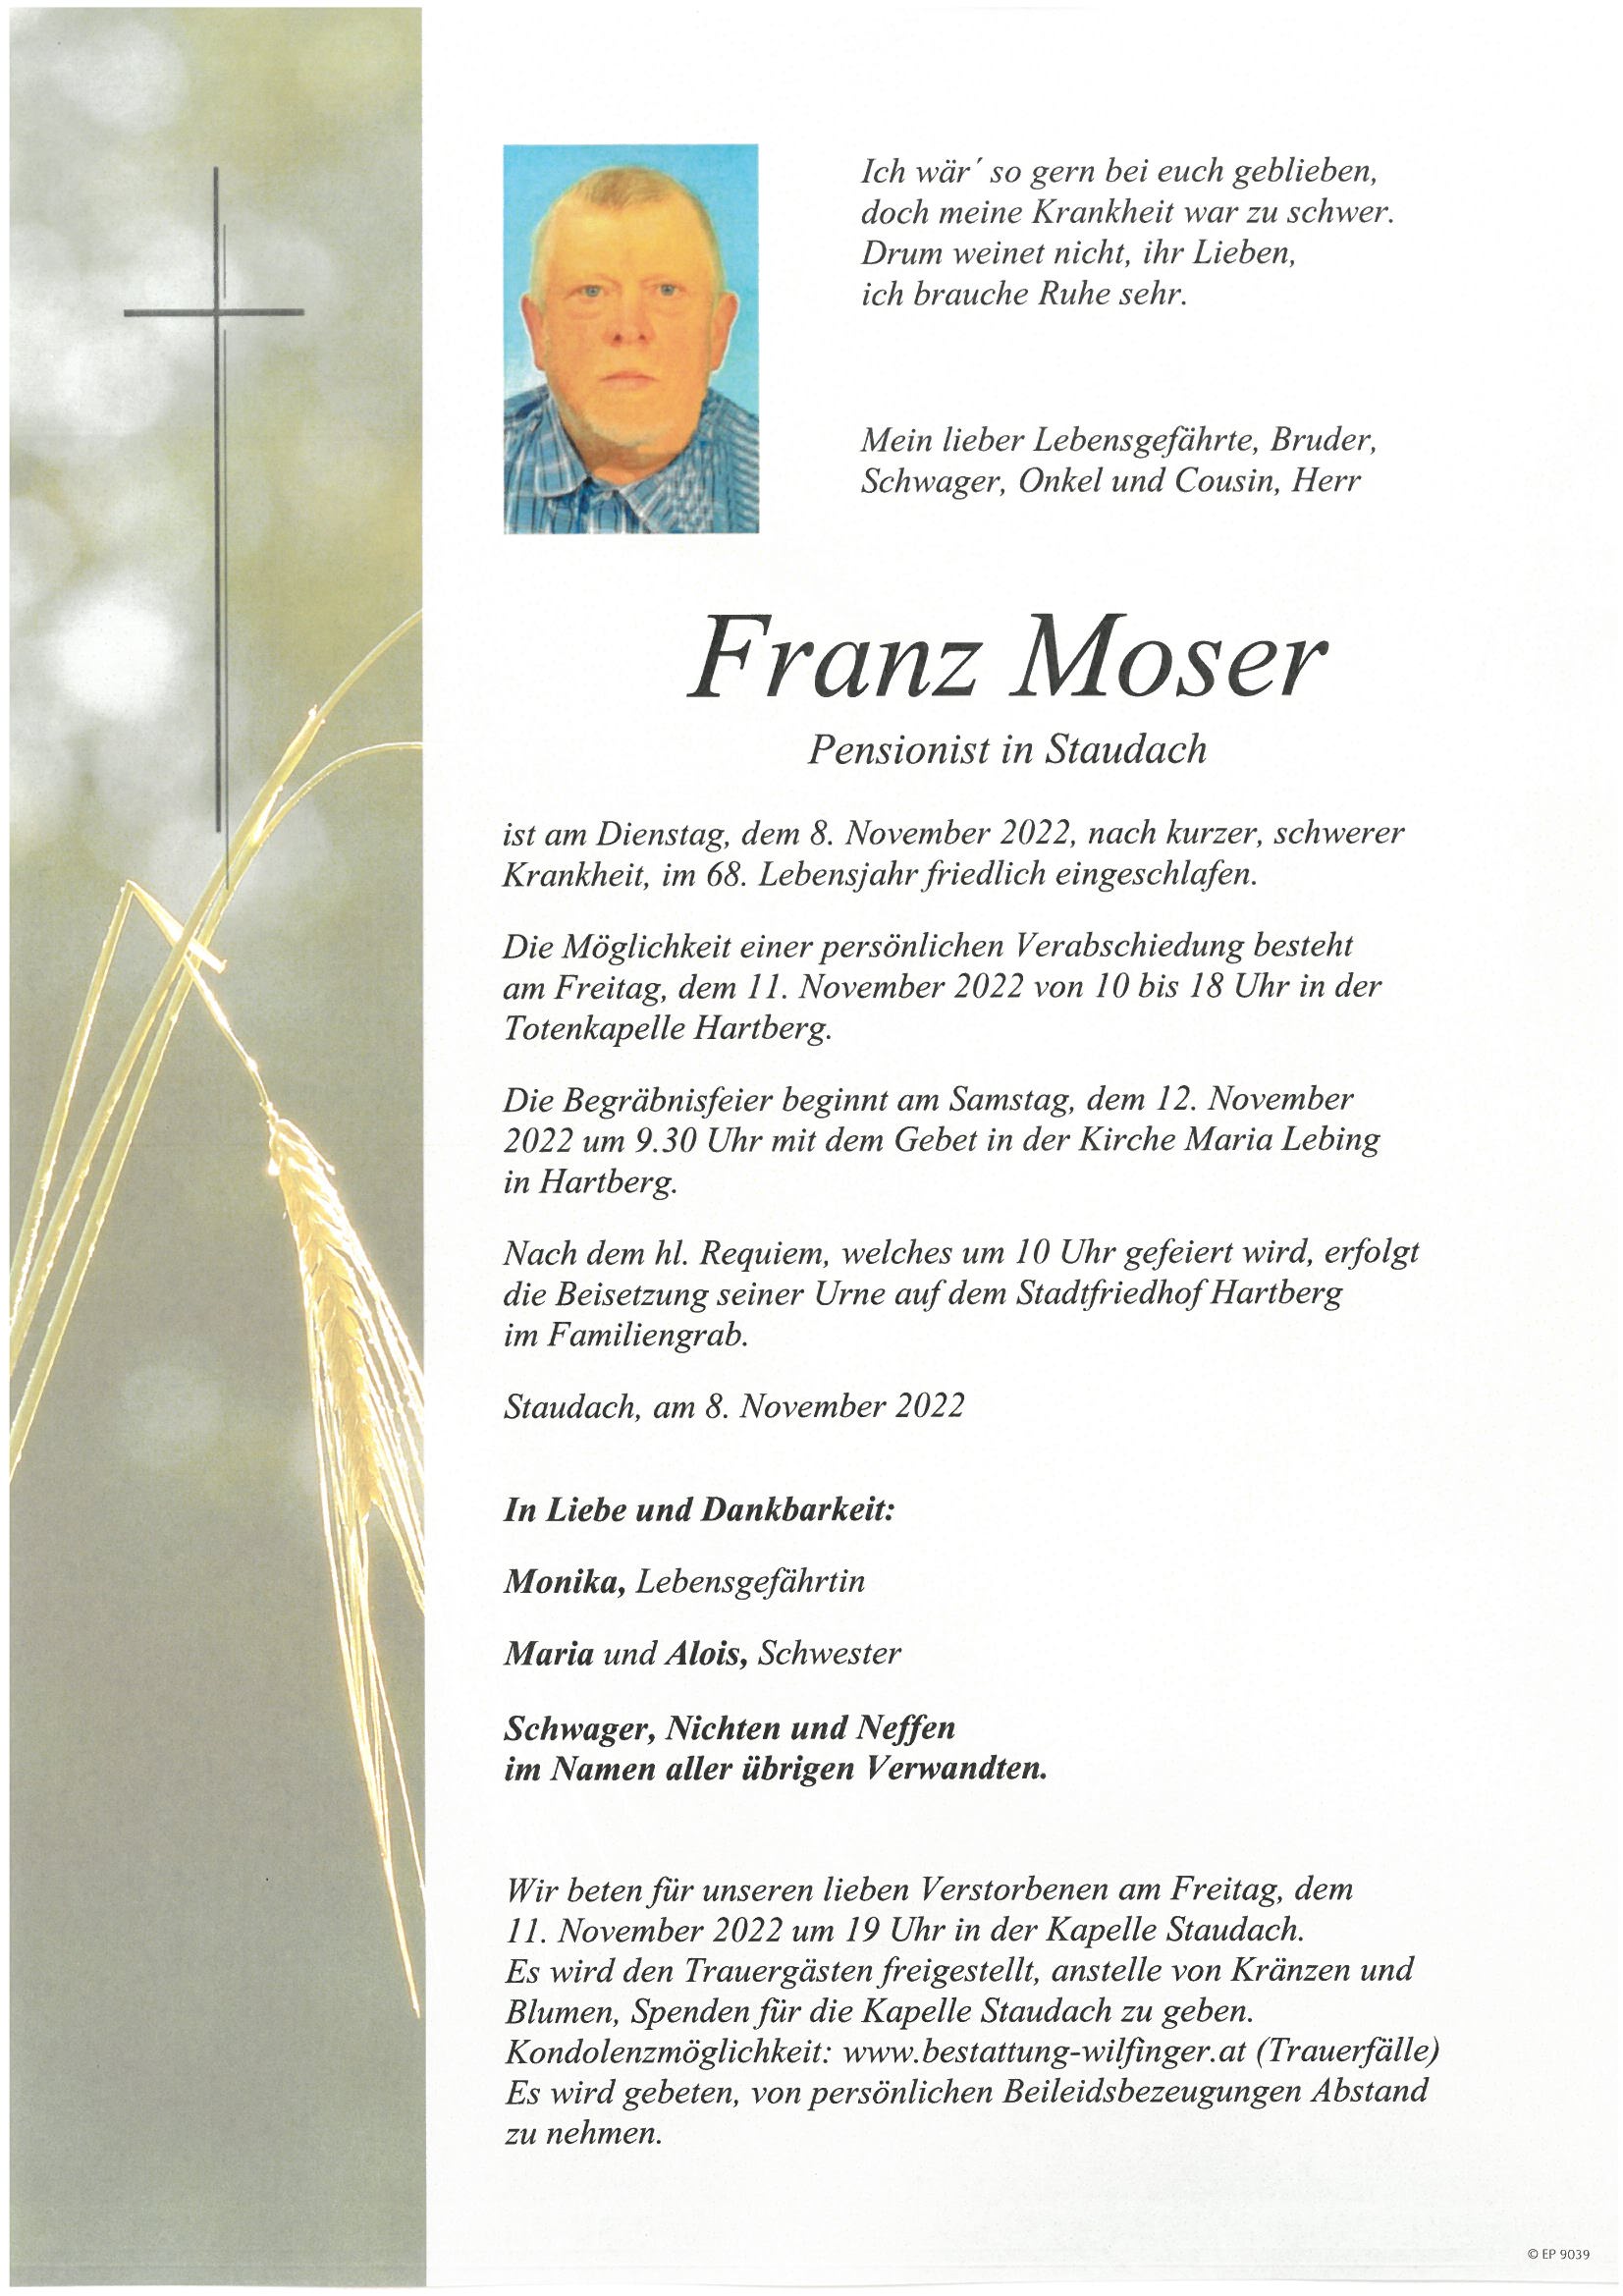 Franz Moser, Staudach